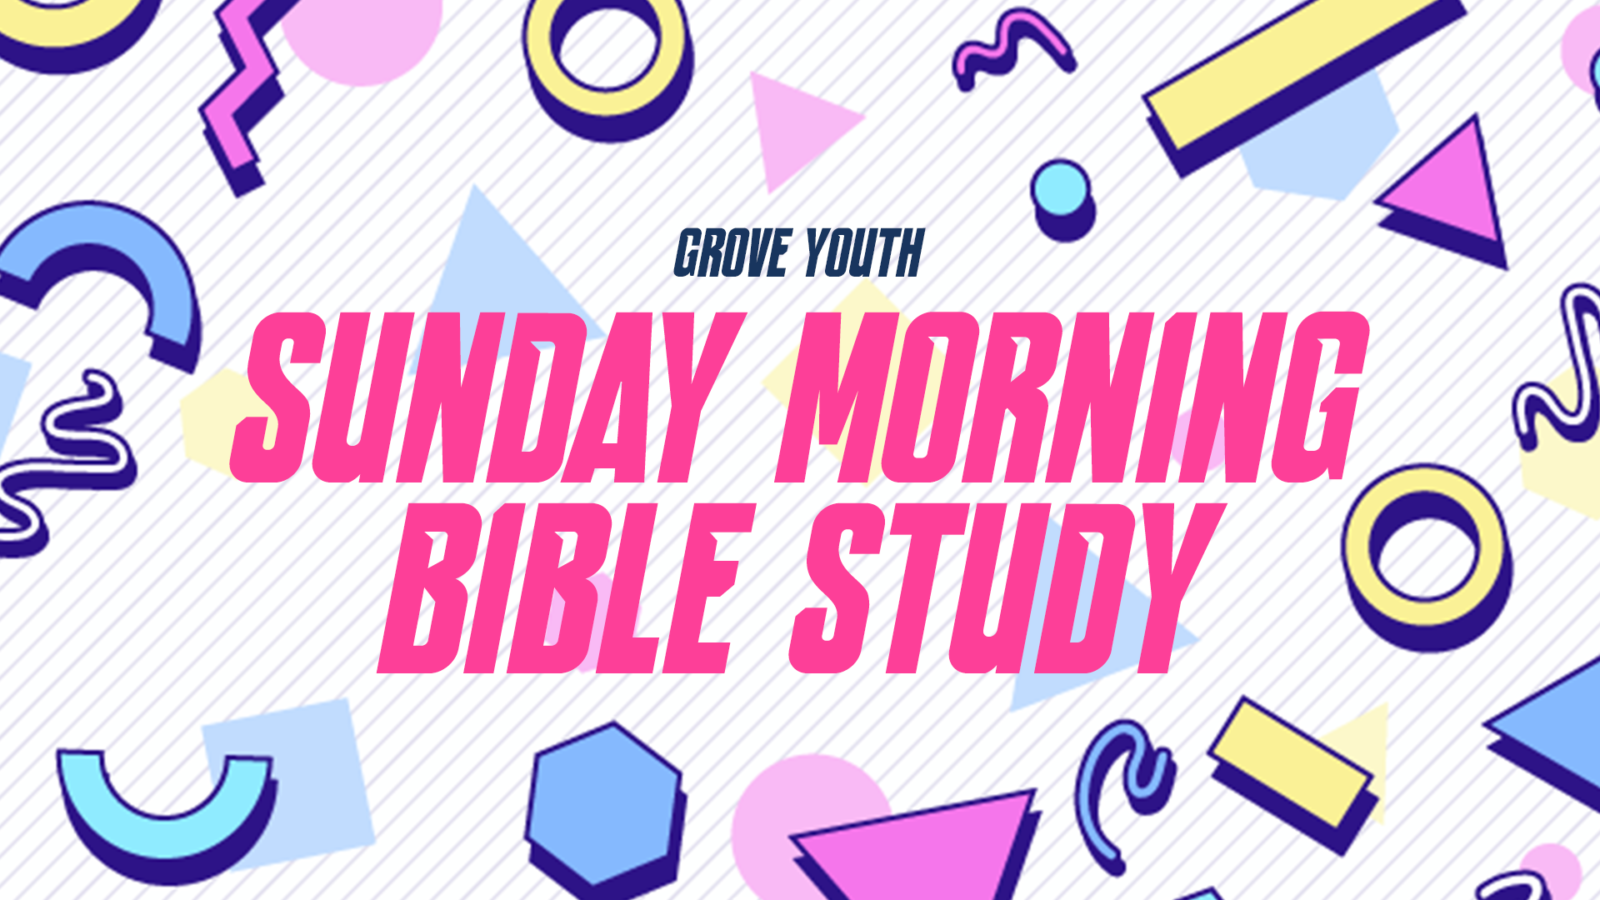 Grove Youth Sunday Bible Study